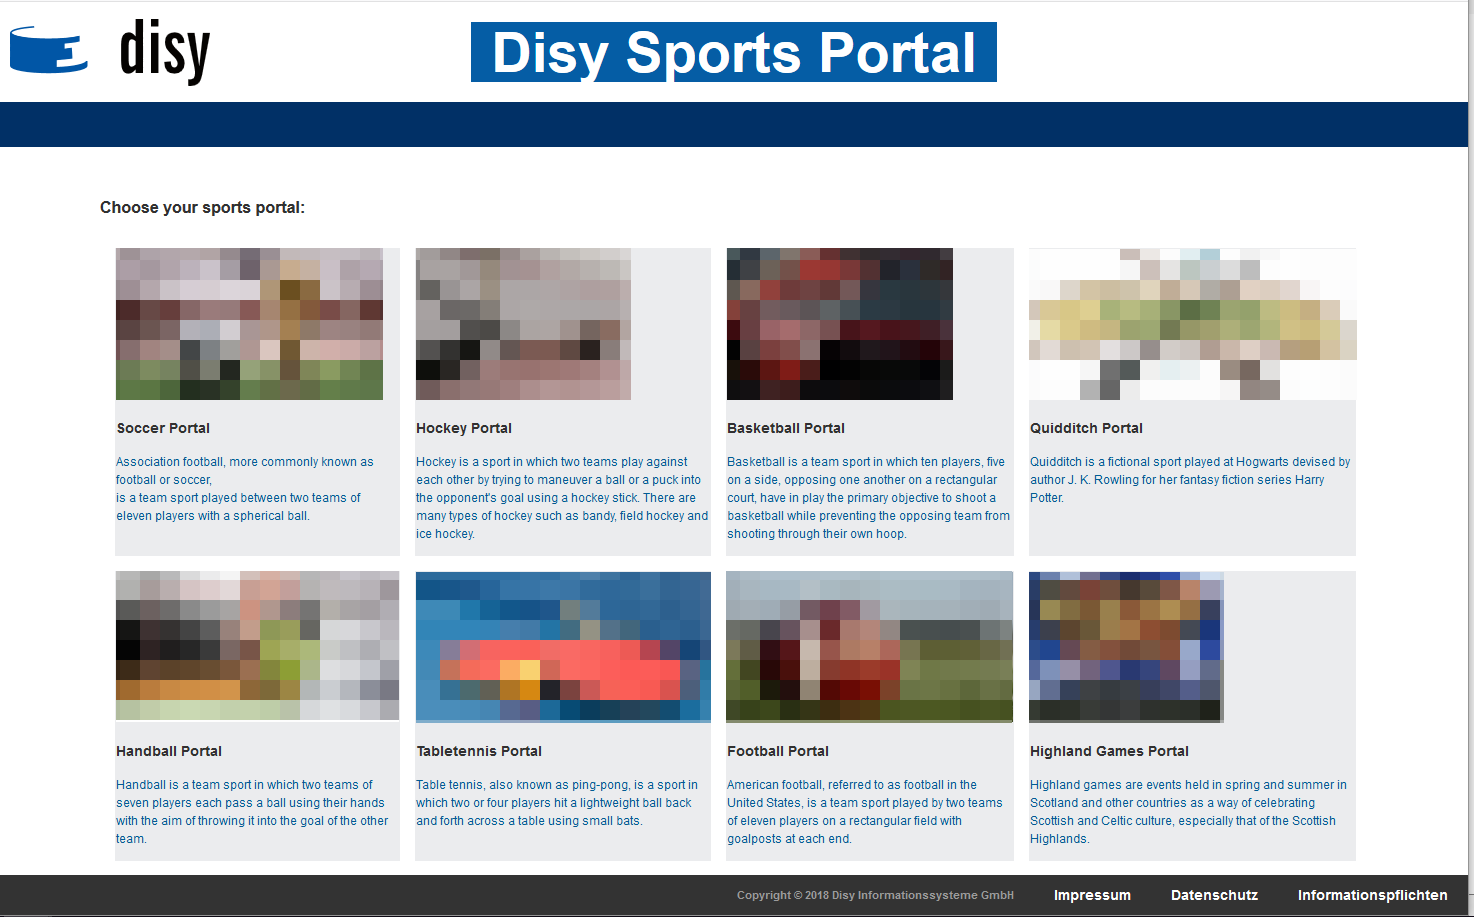 Disy Sports Portal landing page